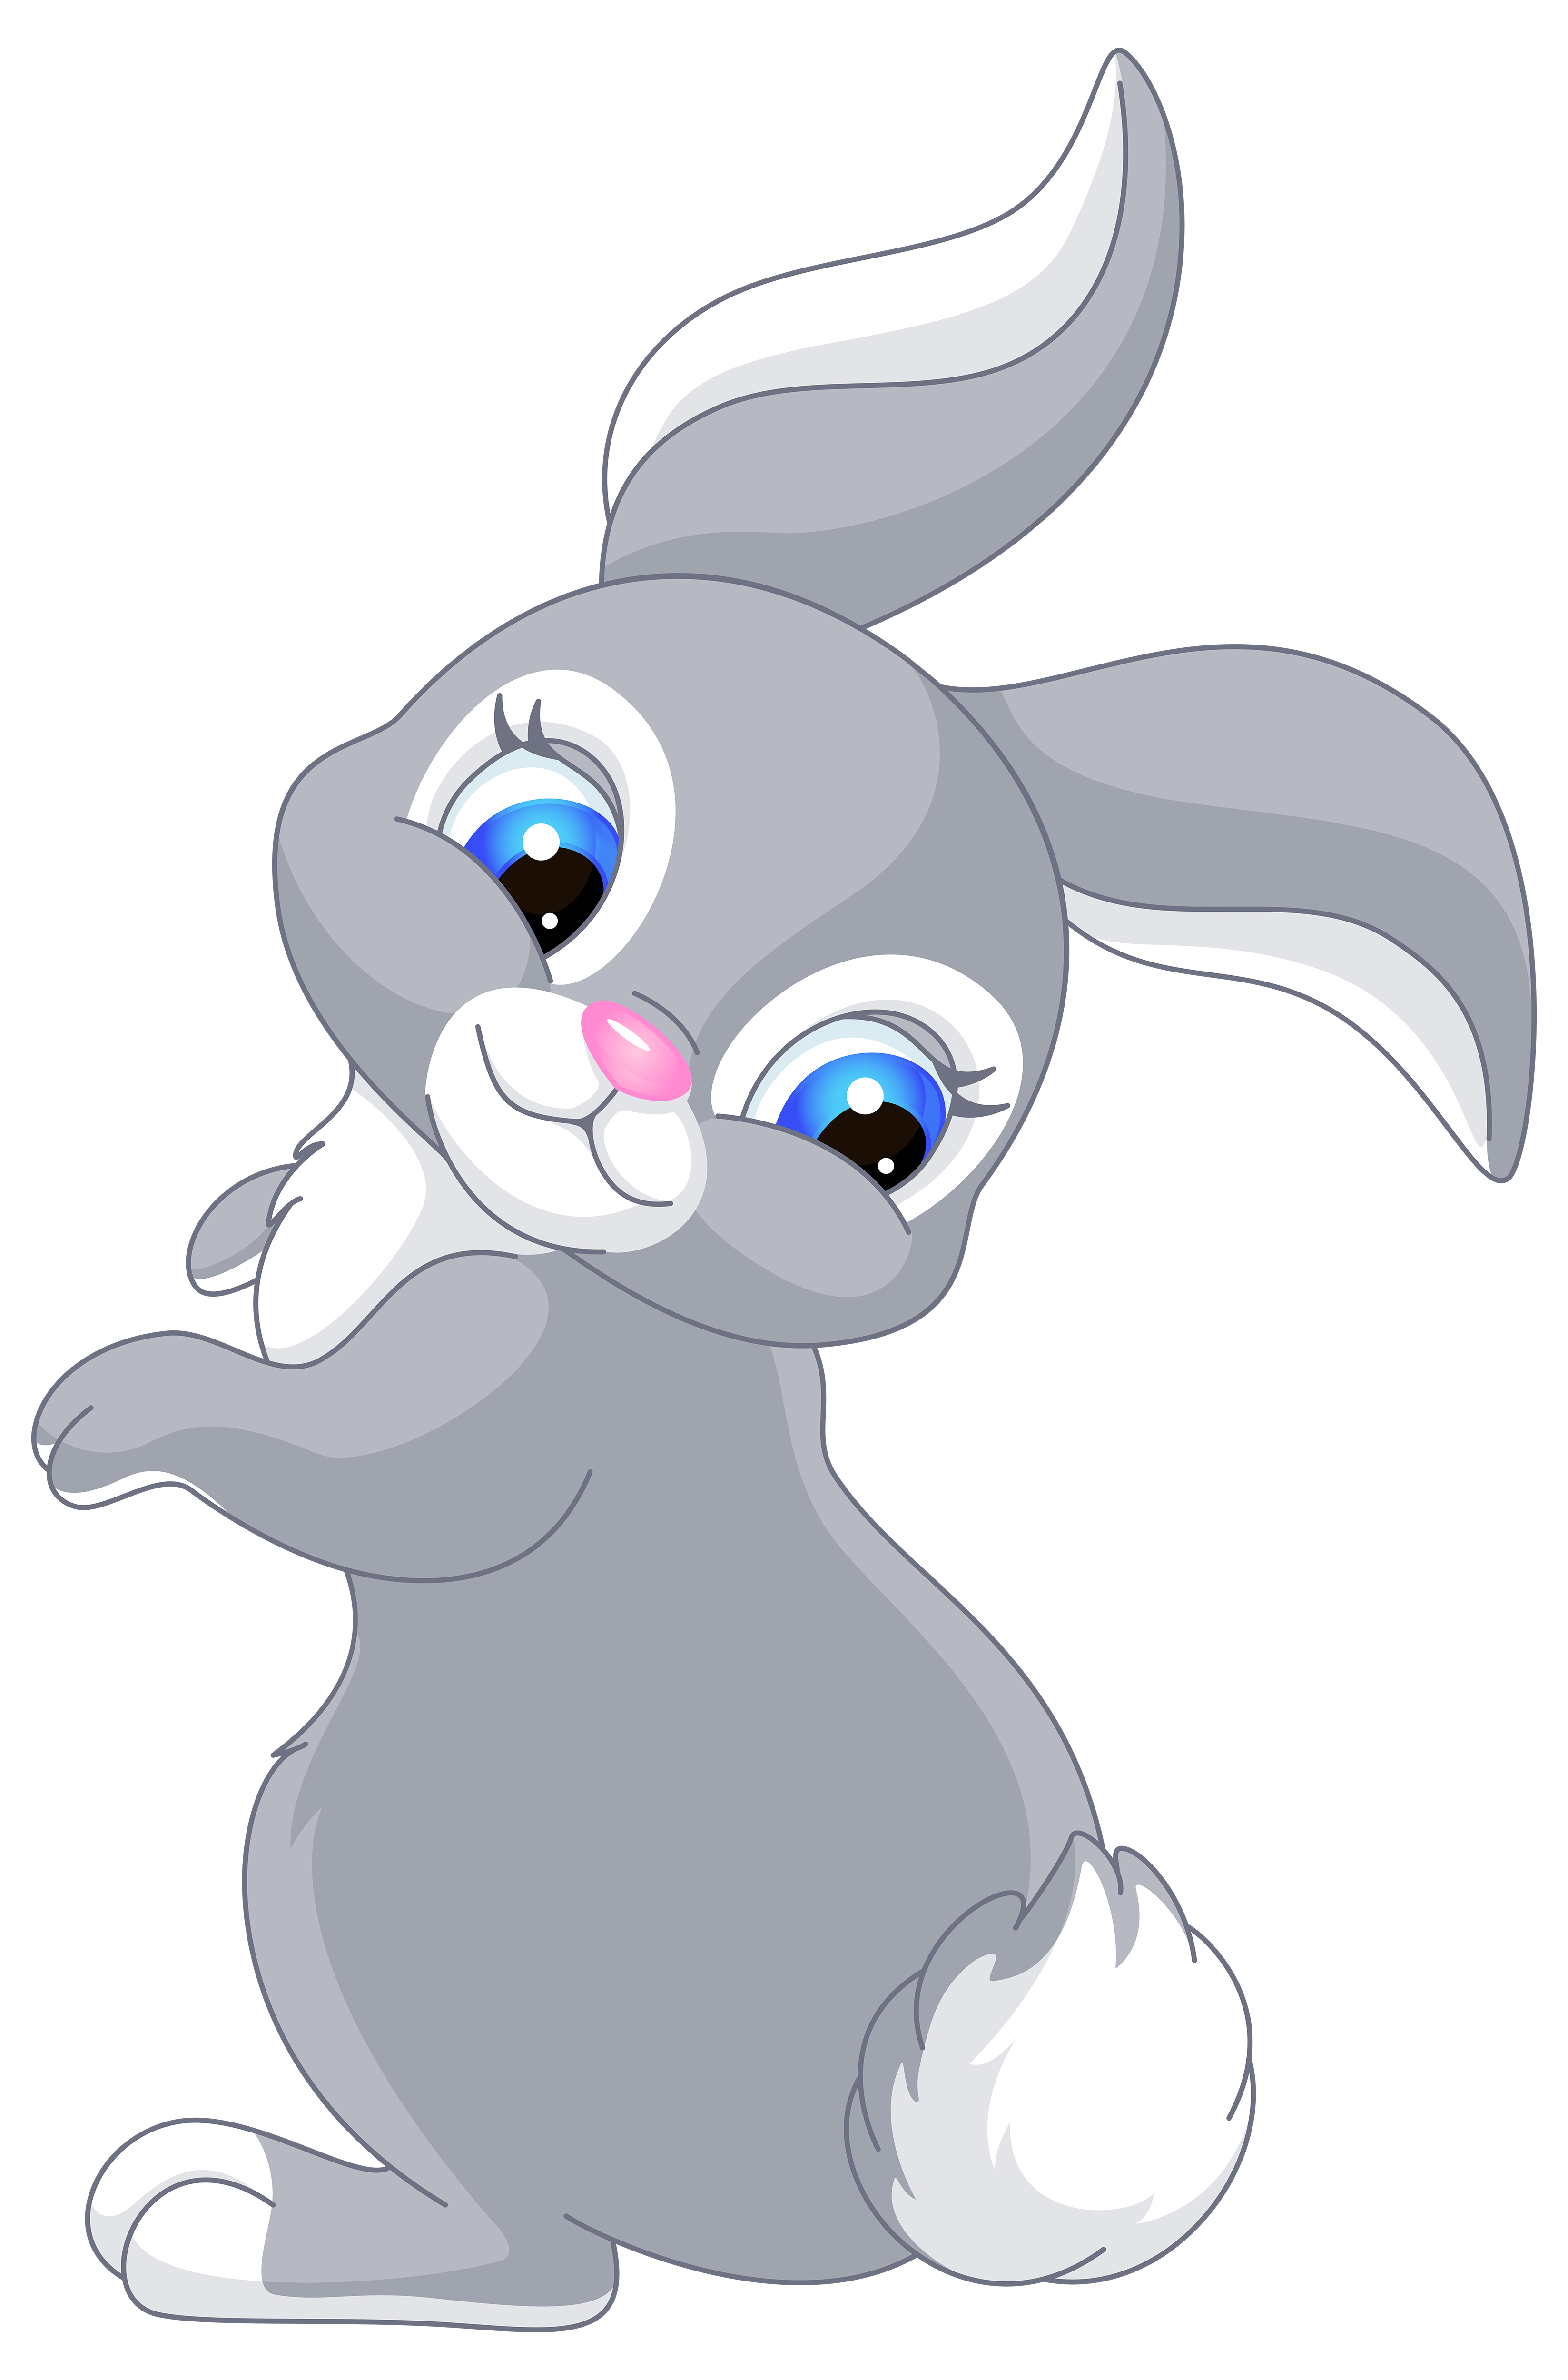 Cute Bunny Cartoon PNG Clip Art Image.